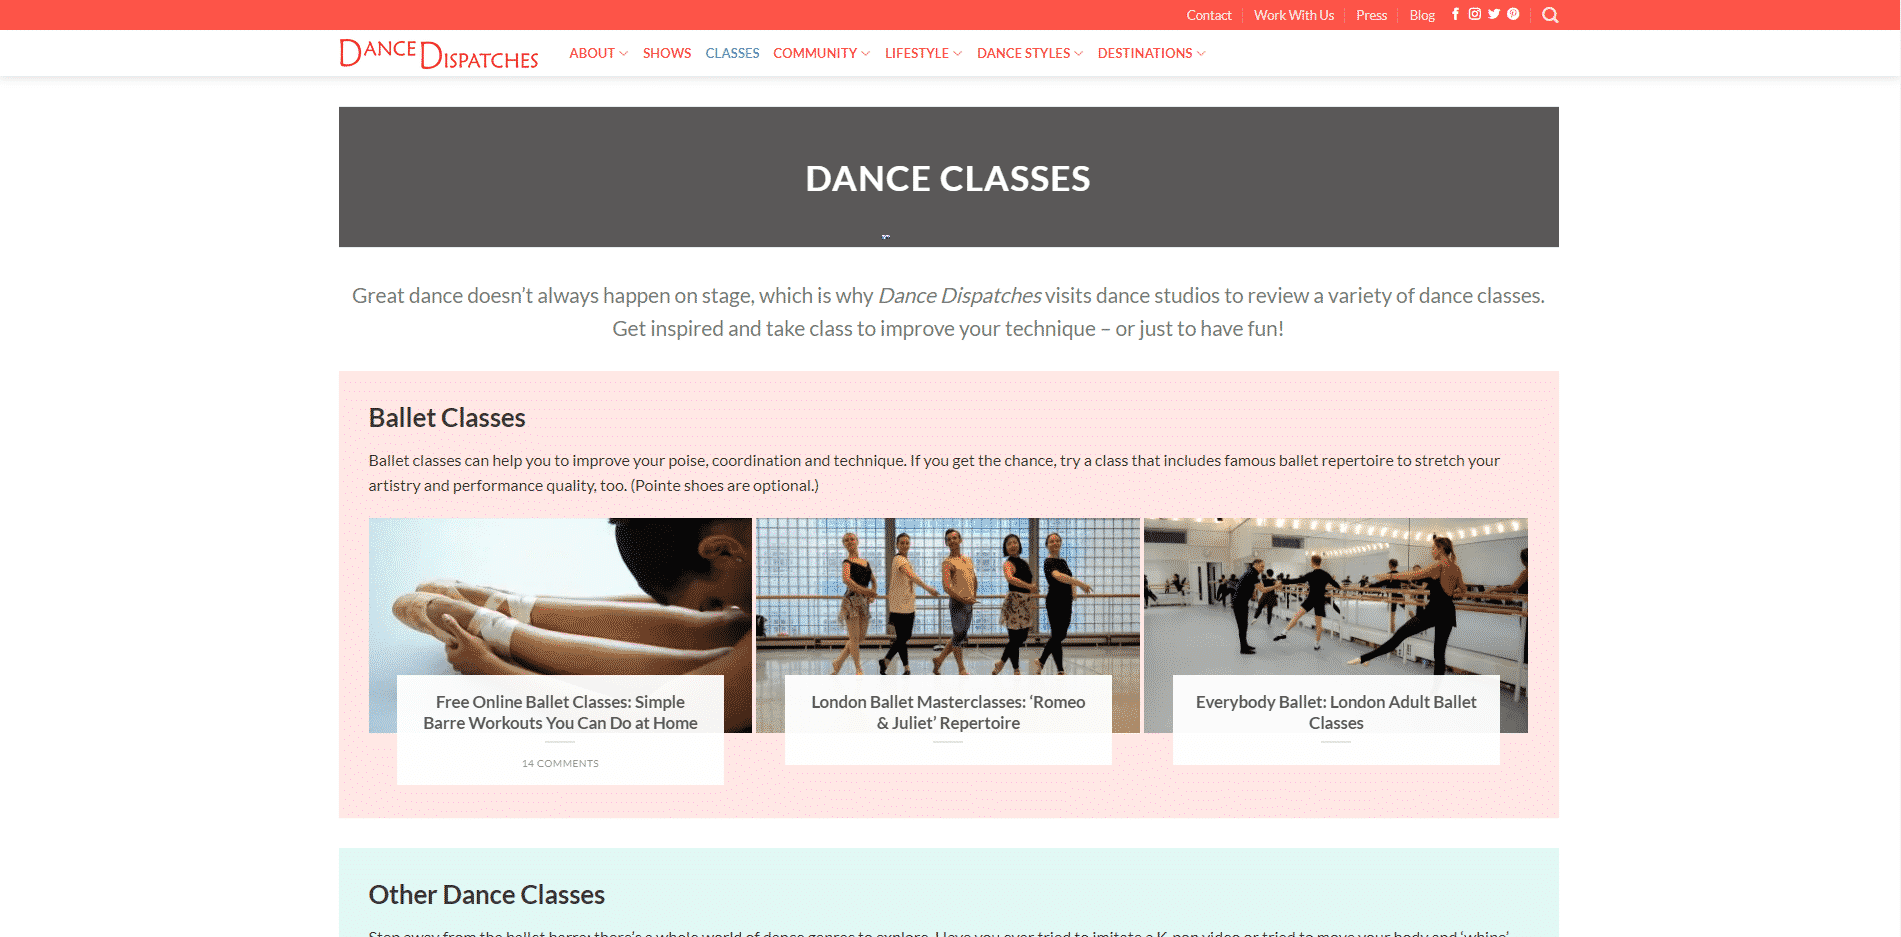 DanceDispatches.com Ballet Lessons for Beginners